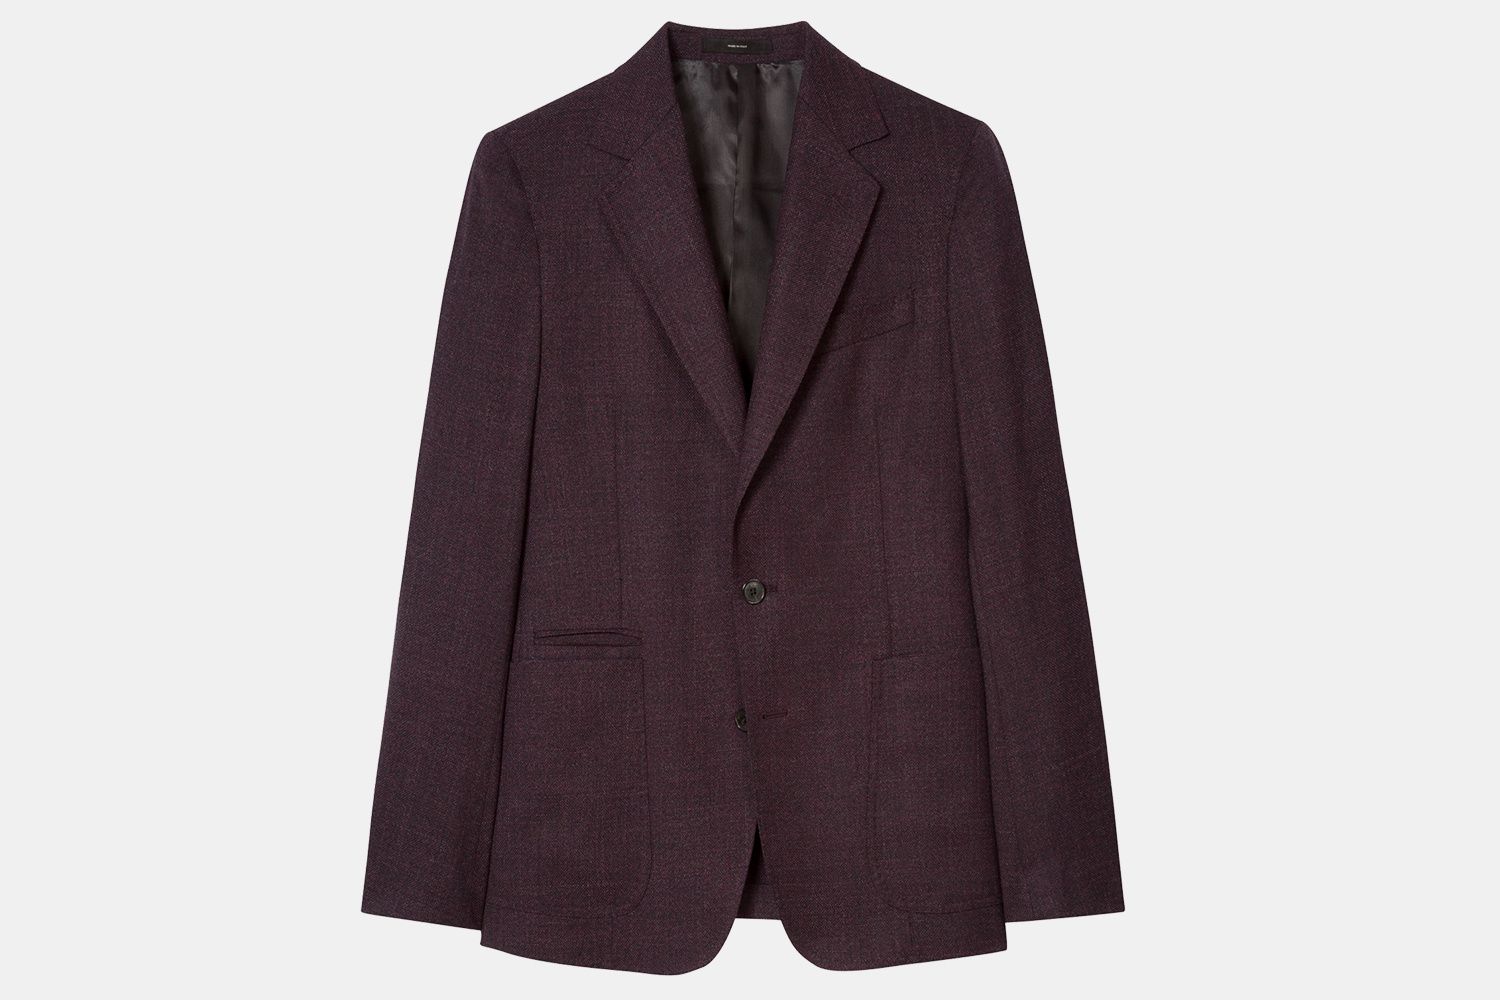 Paul Smith Men's Burgundy Textured Wool Buggy-Lined Blazer Discount